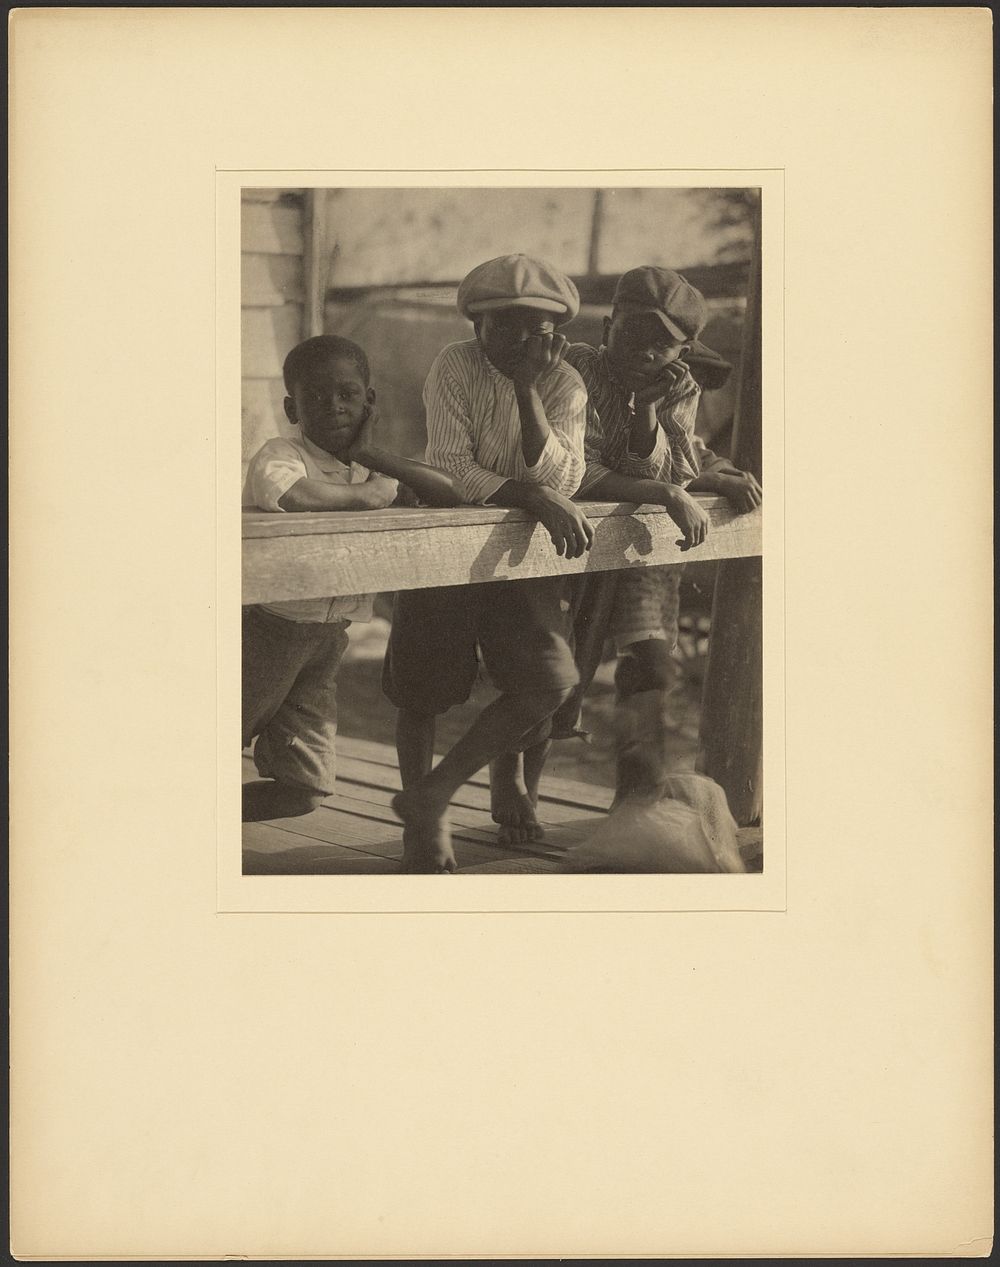 Three Black Boys Leaning Over Wooden Railing by Doris Ulmann